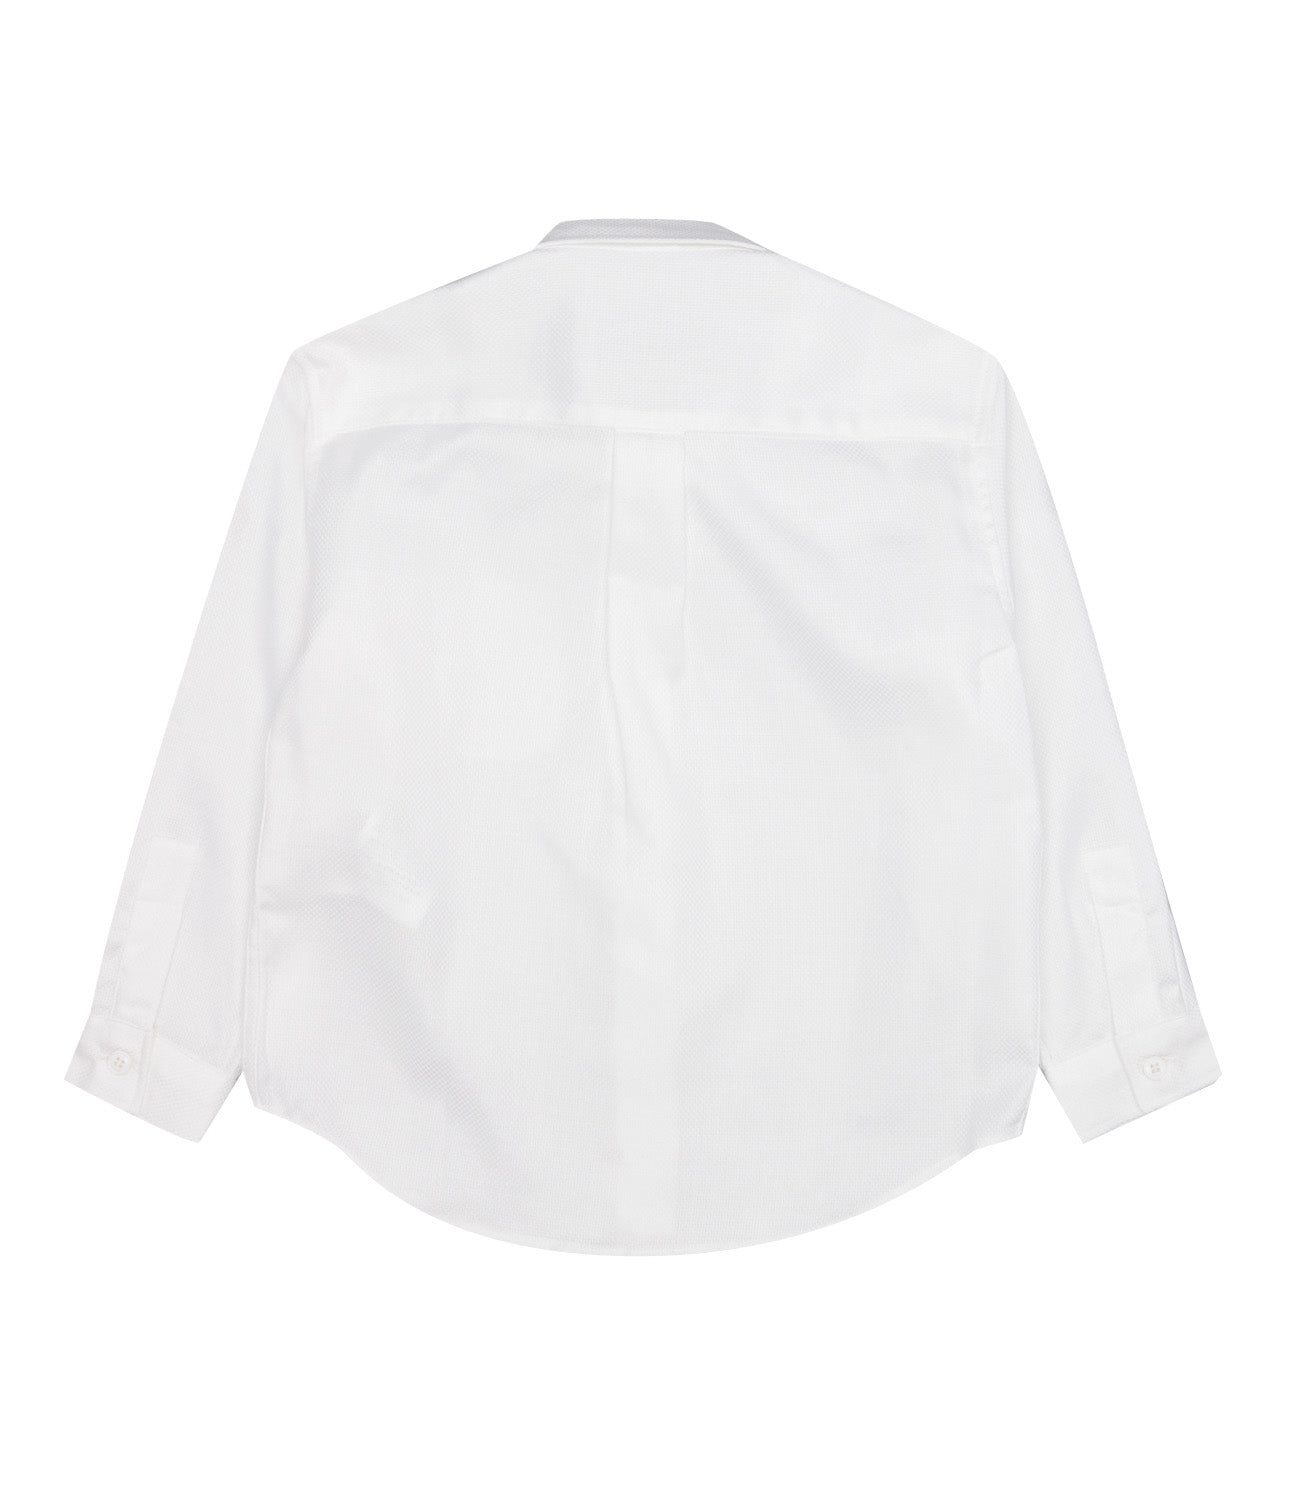 Dondup Junior | Camicia Bianco